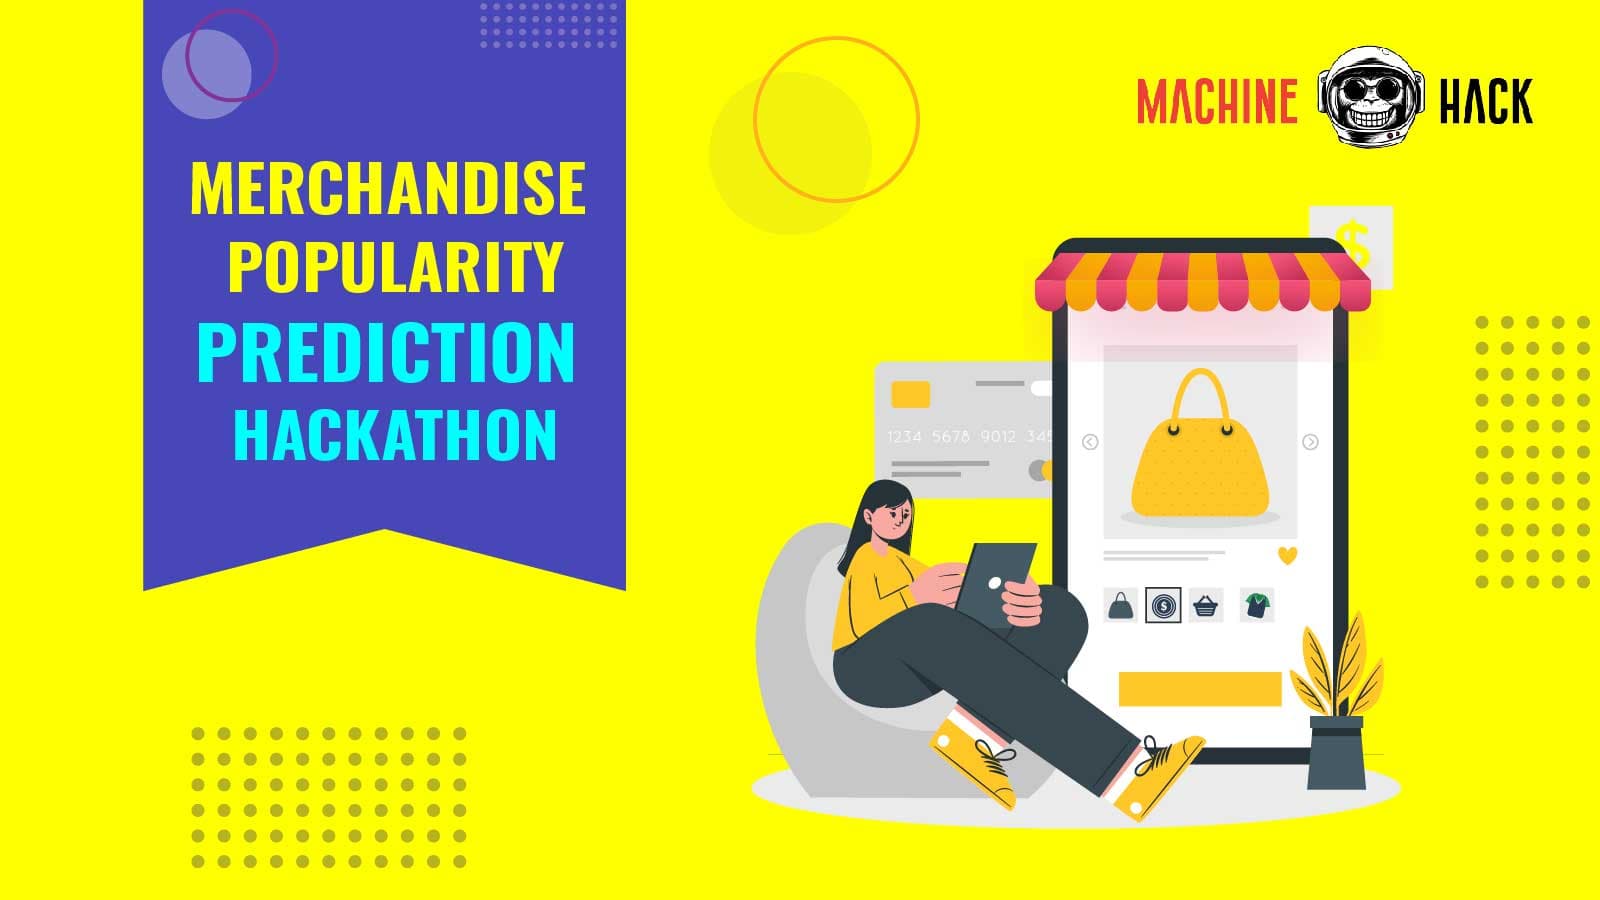 Hackathon Alert! MachineHack Challenges ML Community To Predict Merchandise Popularity